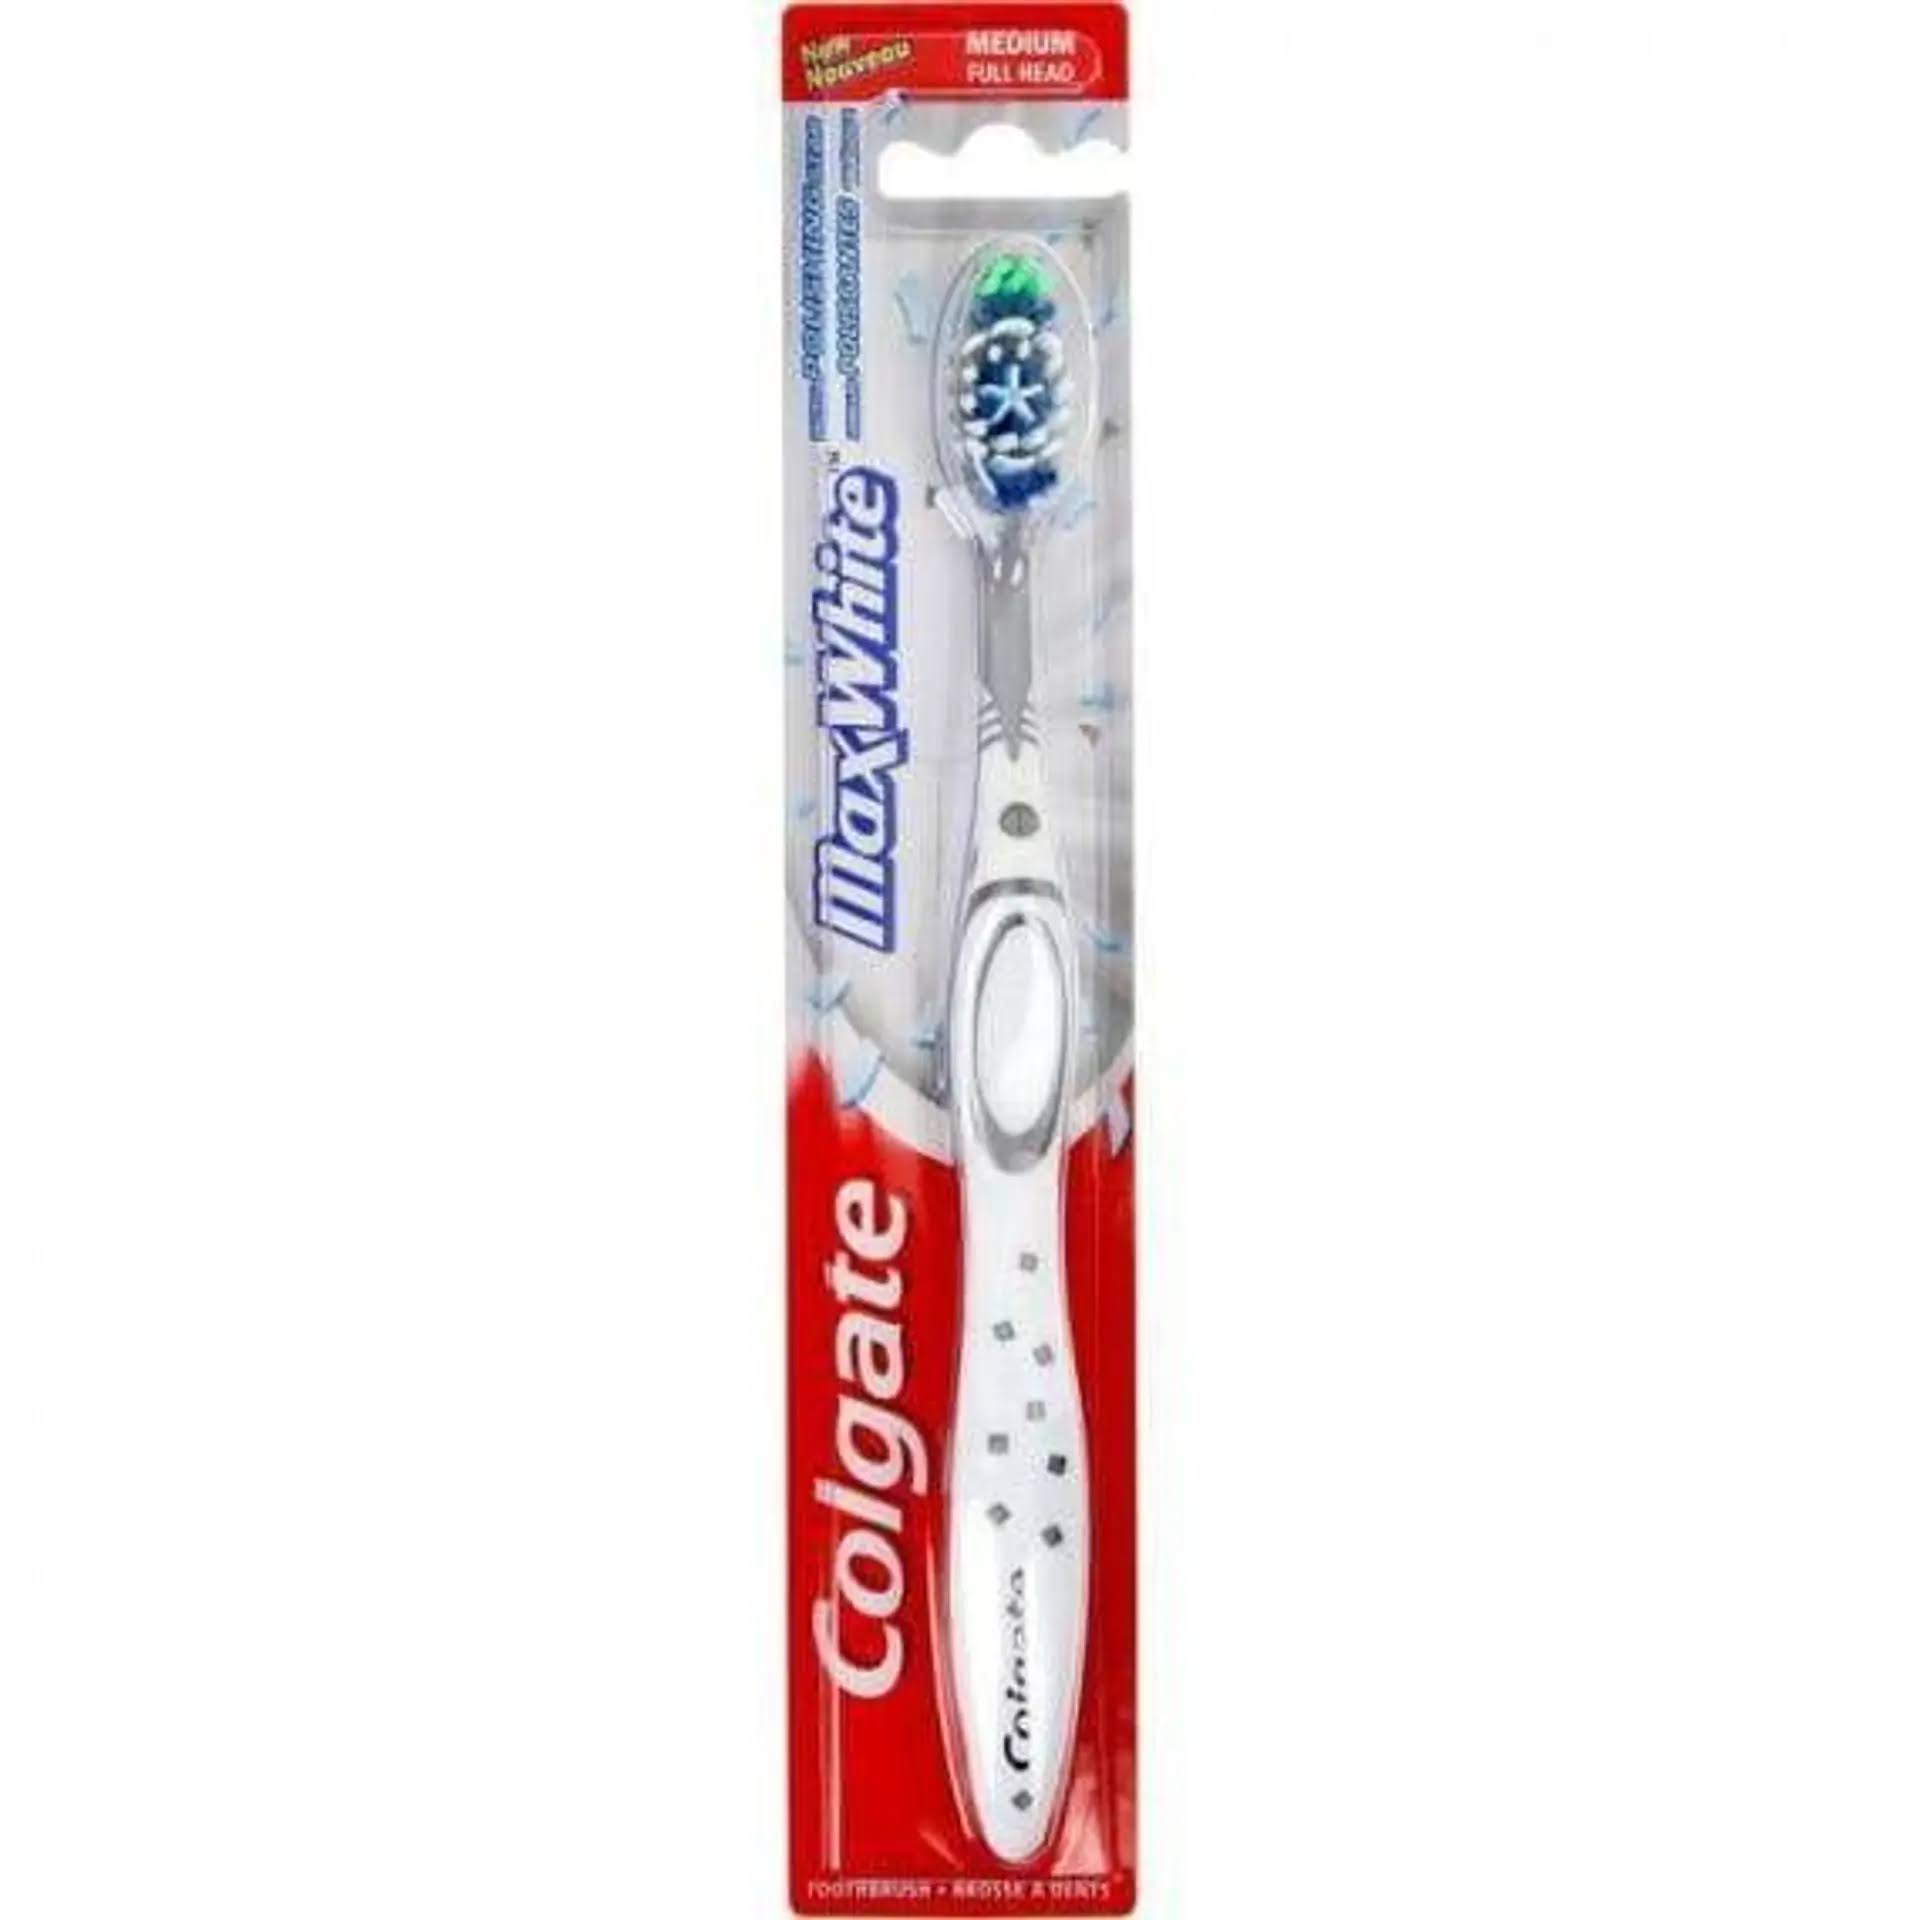 Colgate Max White Medium Toothbrush - Each